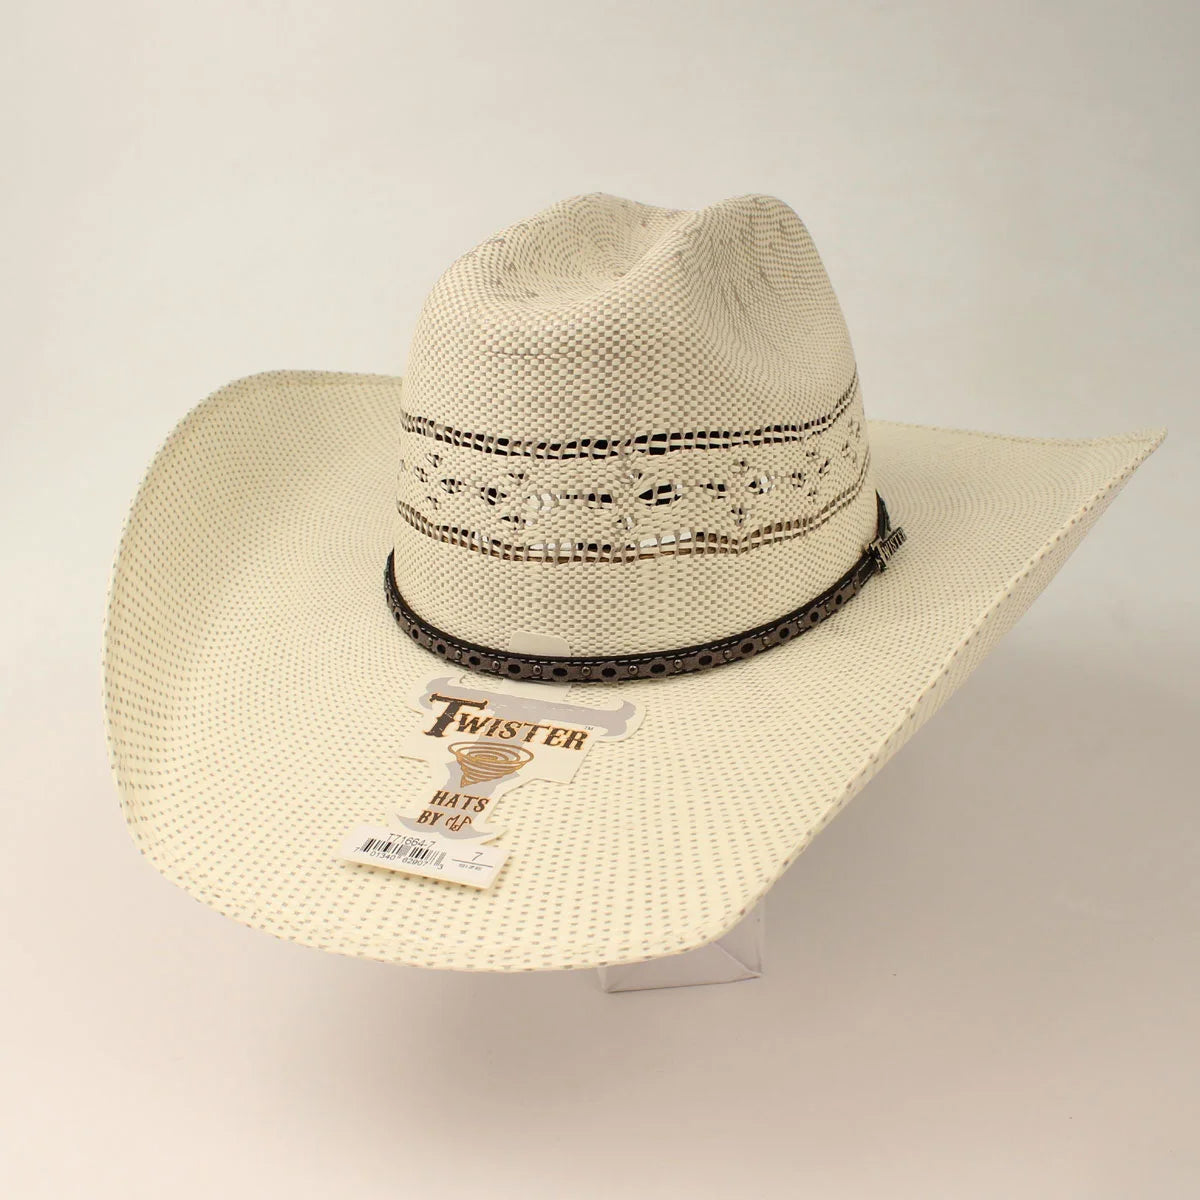 Twister Bangora Straw Hat 4 1/4" Brim/Crown - Ivory and Gray